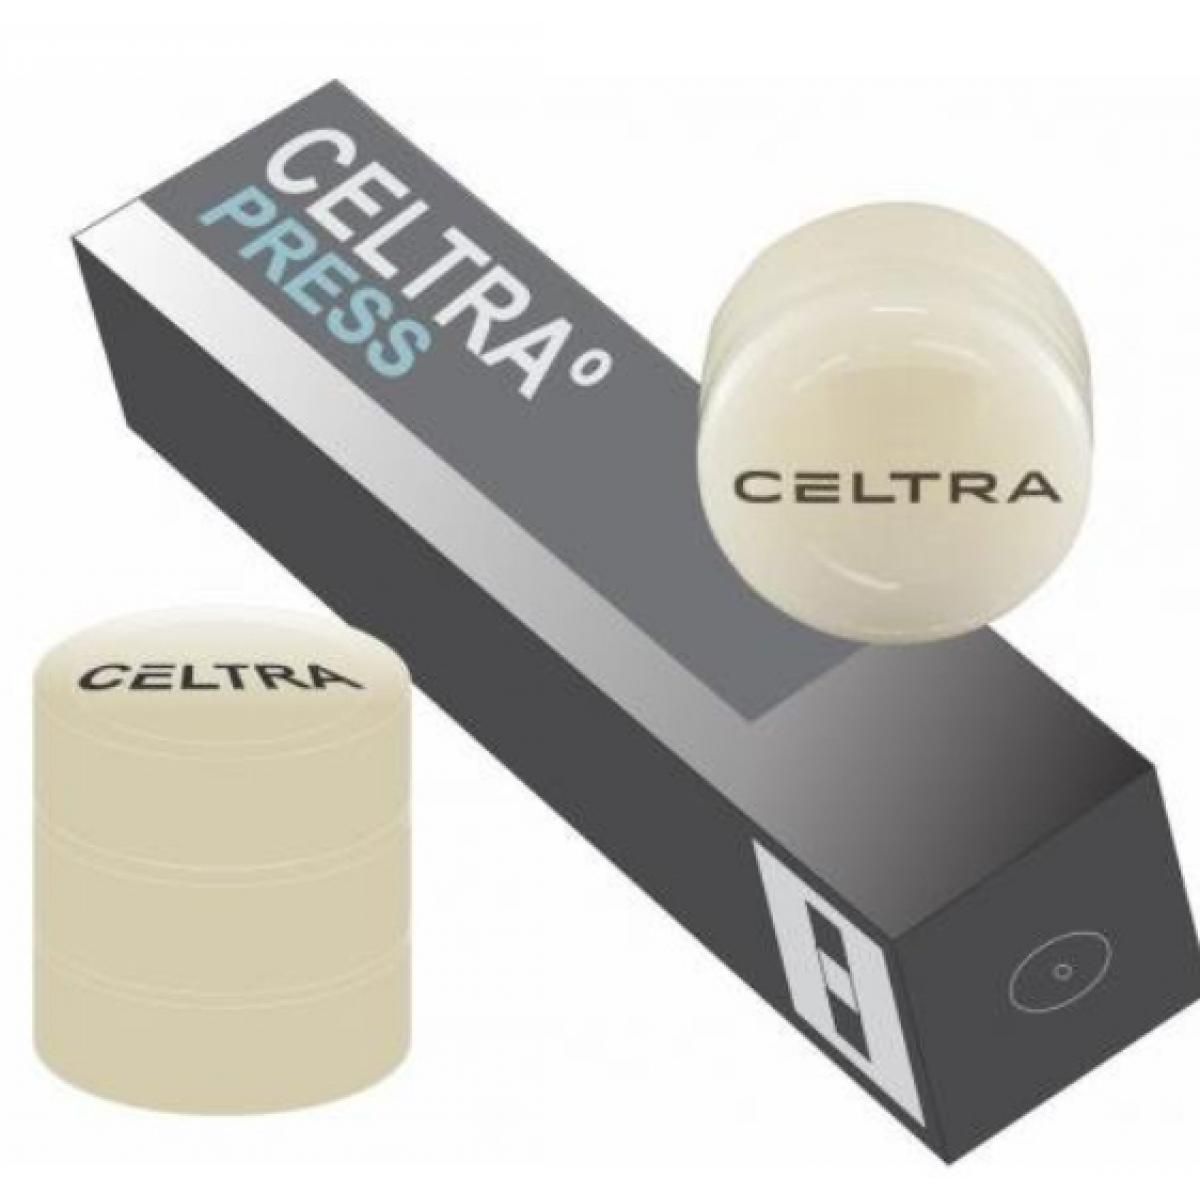 CELTRA PRESS HT I3 5 X 3 GR DENTSPLY -